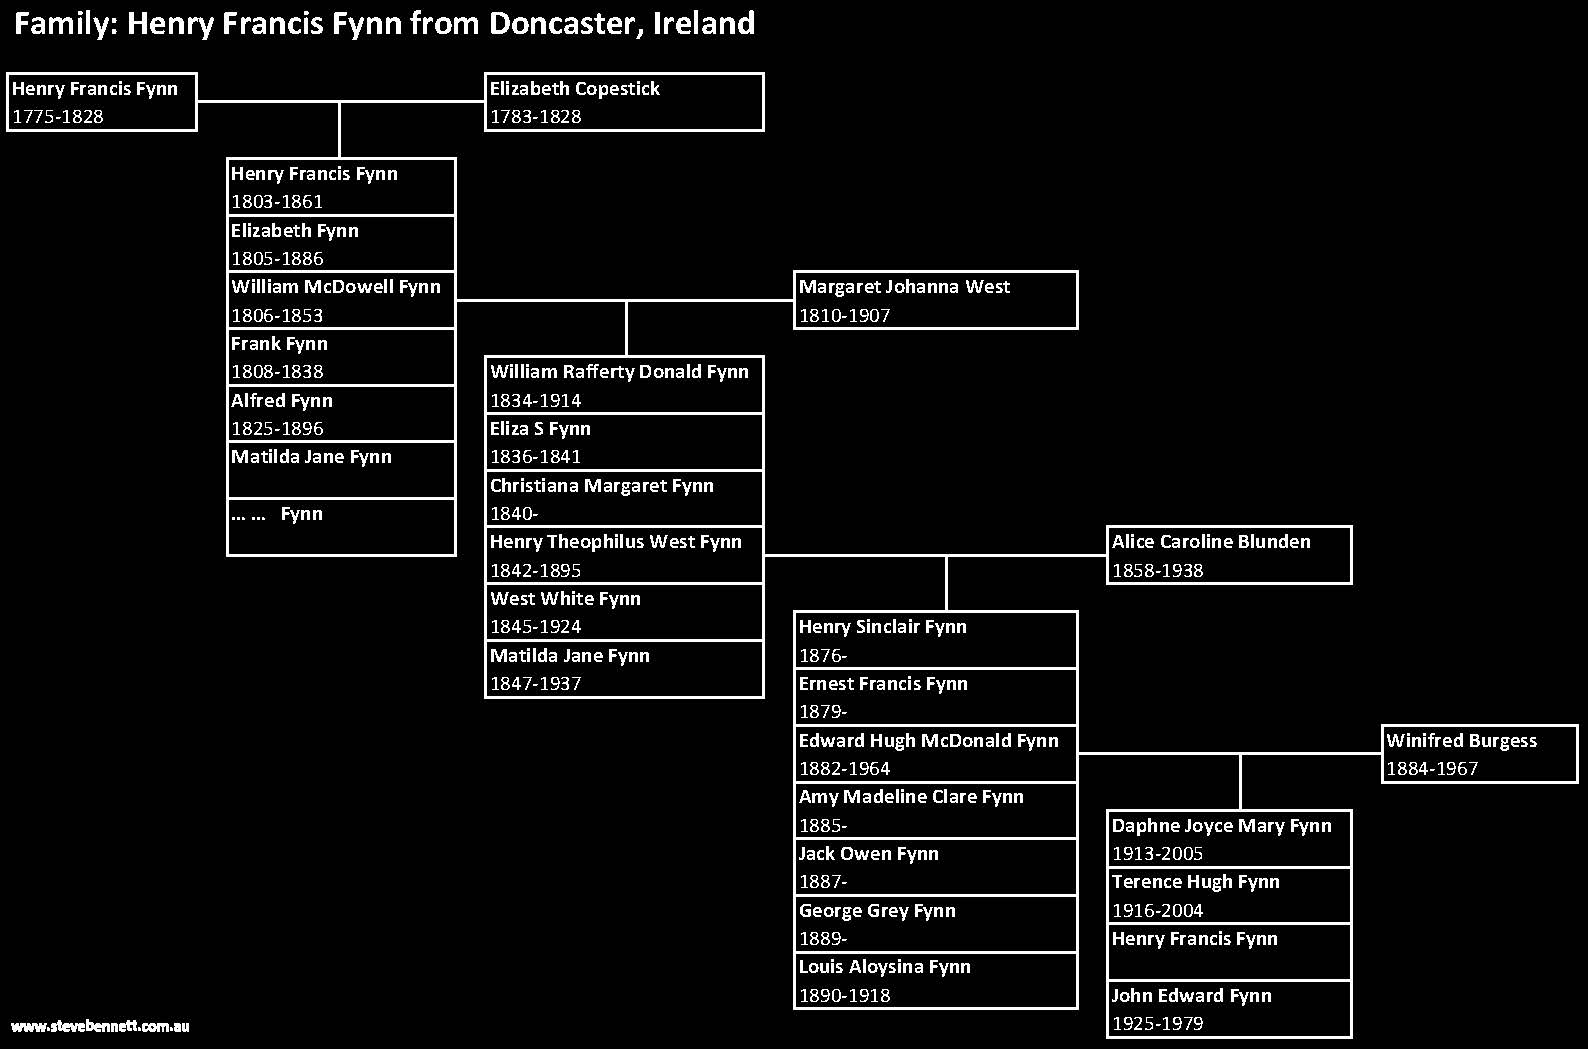 Family tree for Henry Francis Fynn